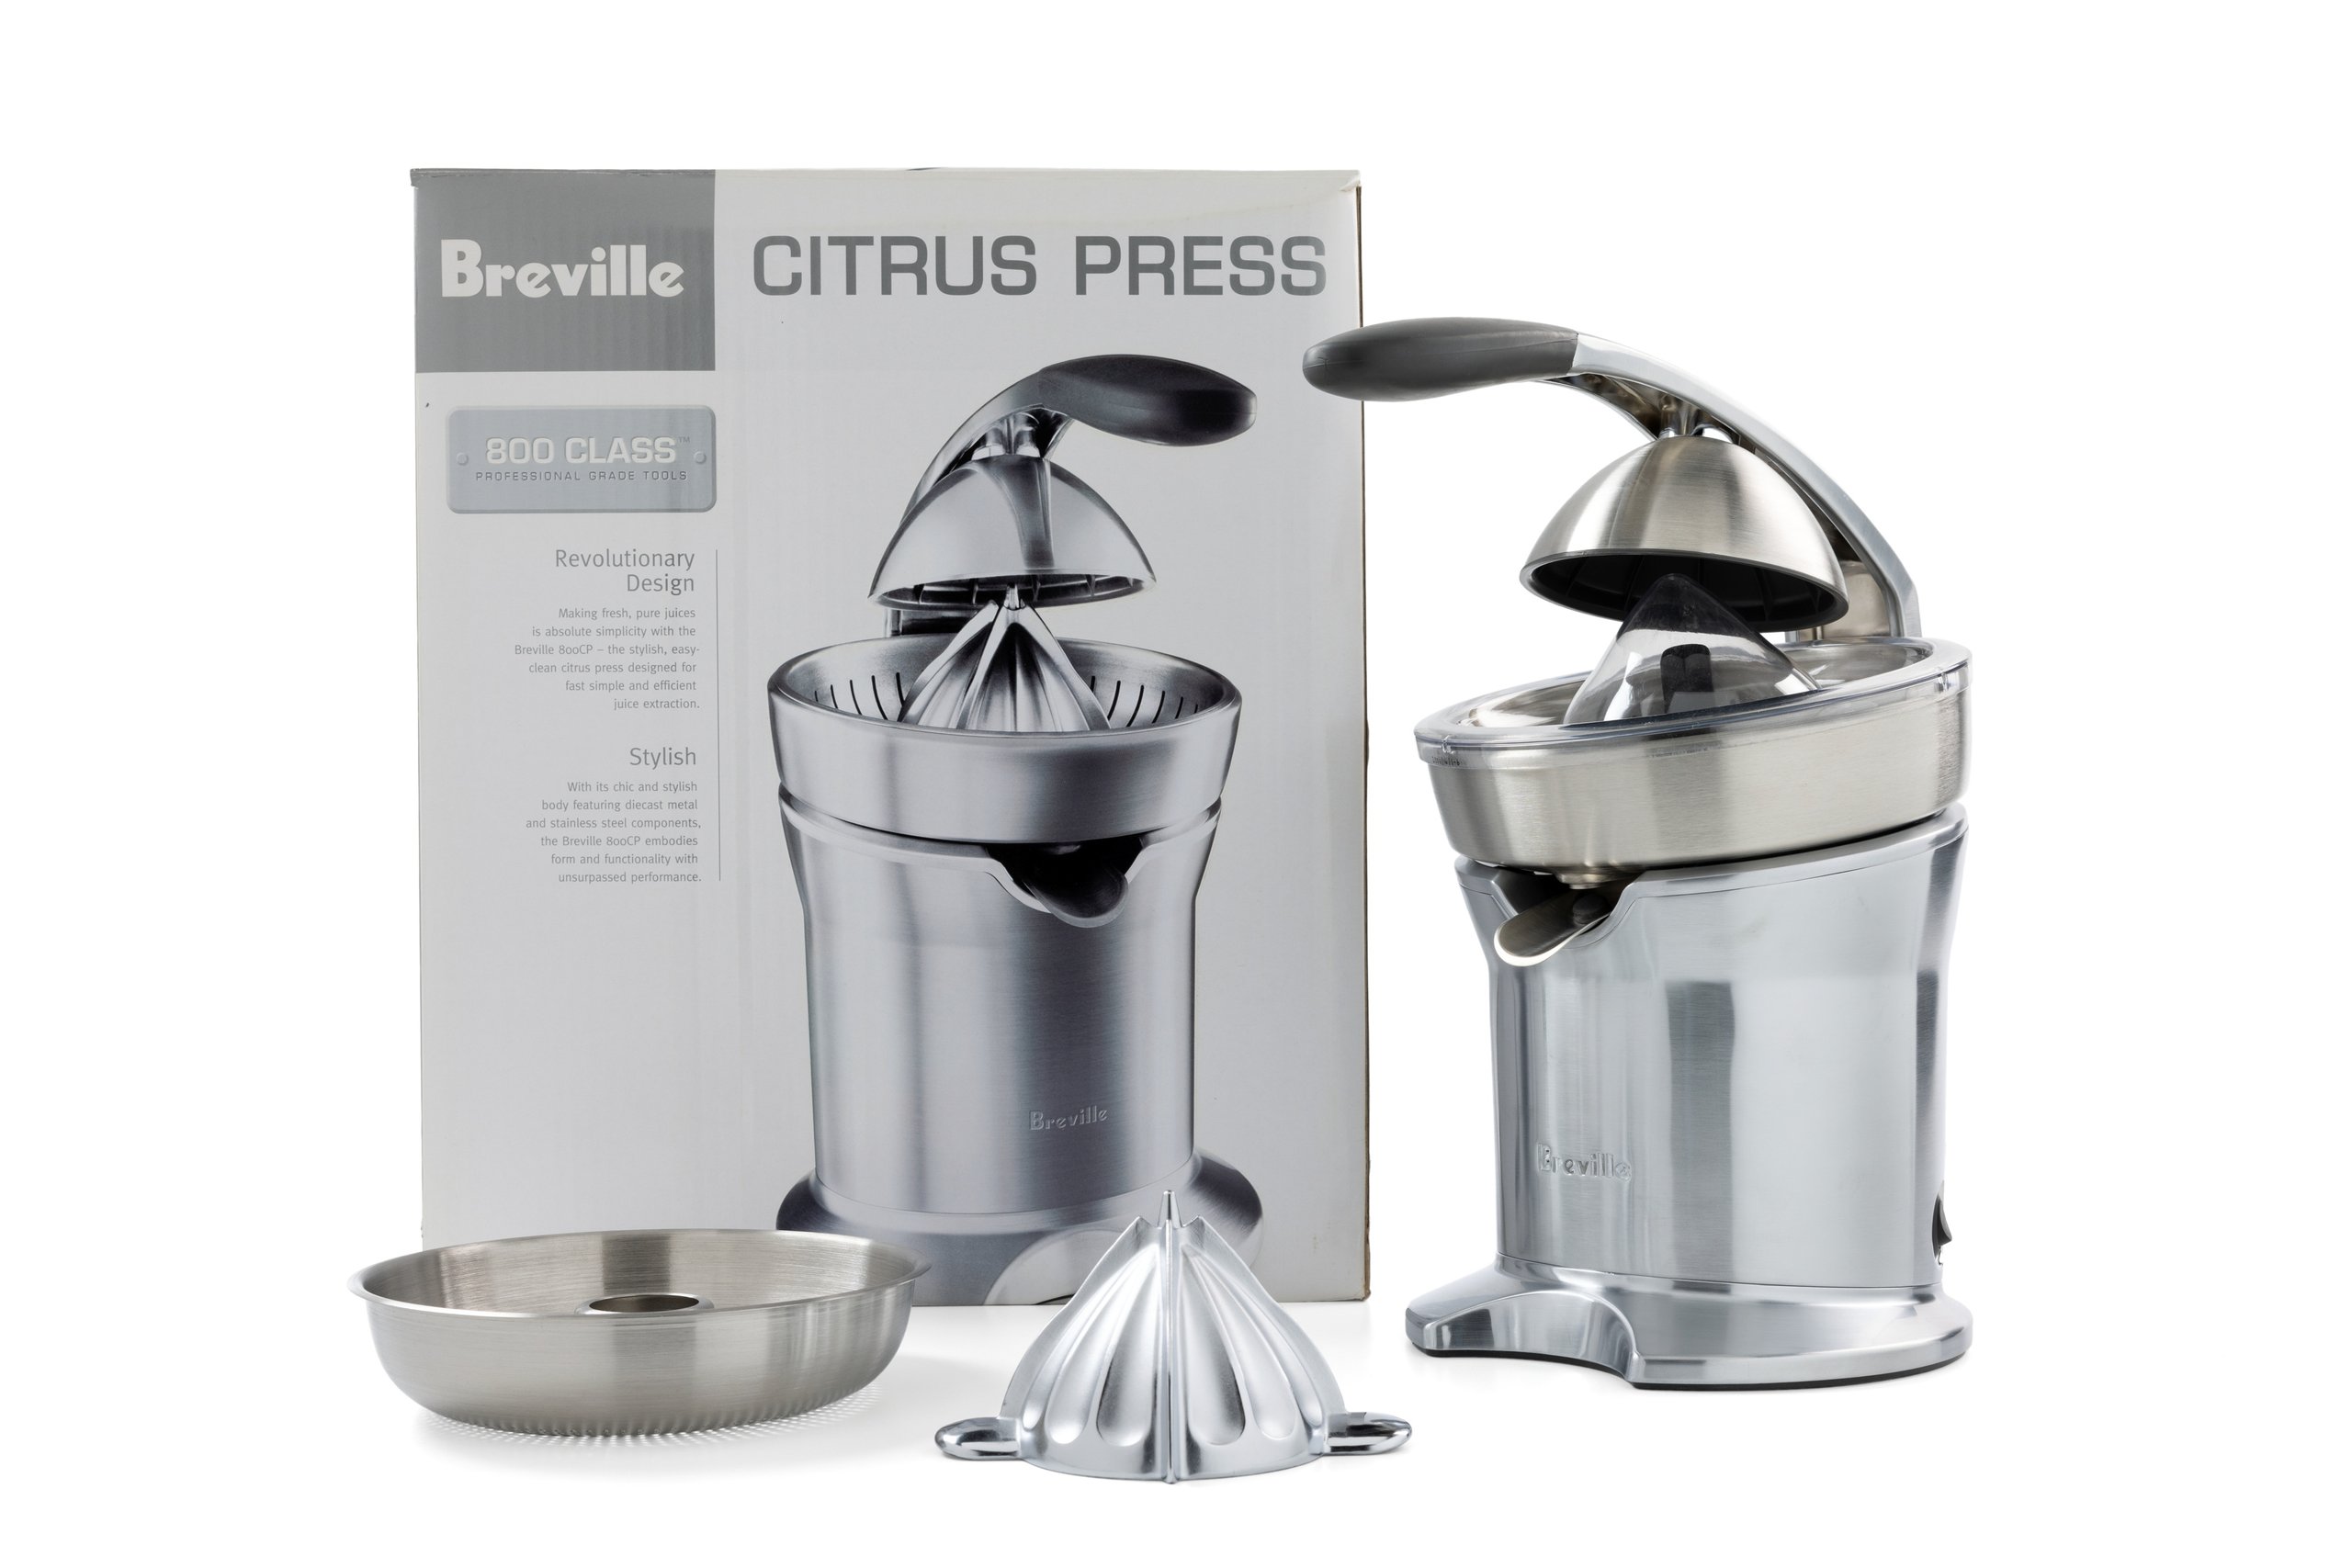 Breville 800 Class Citrus Press